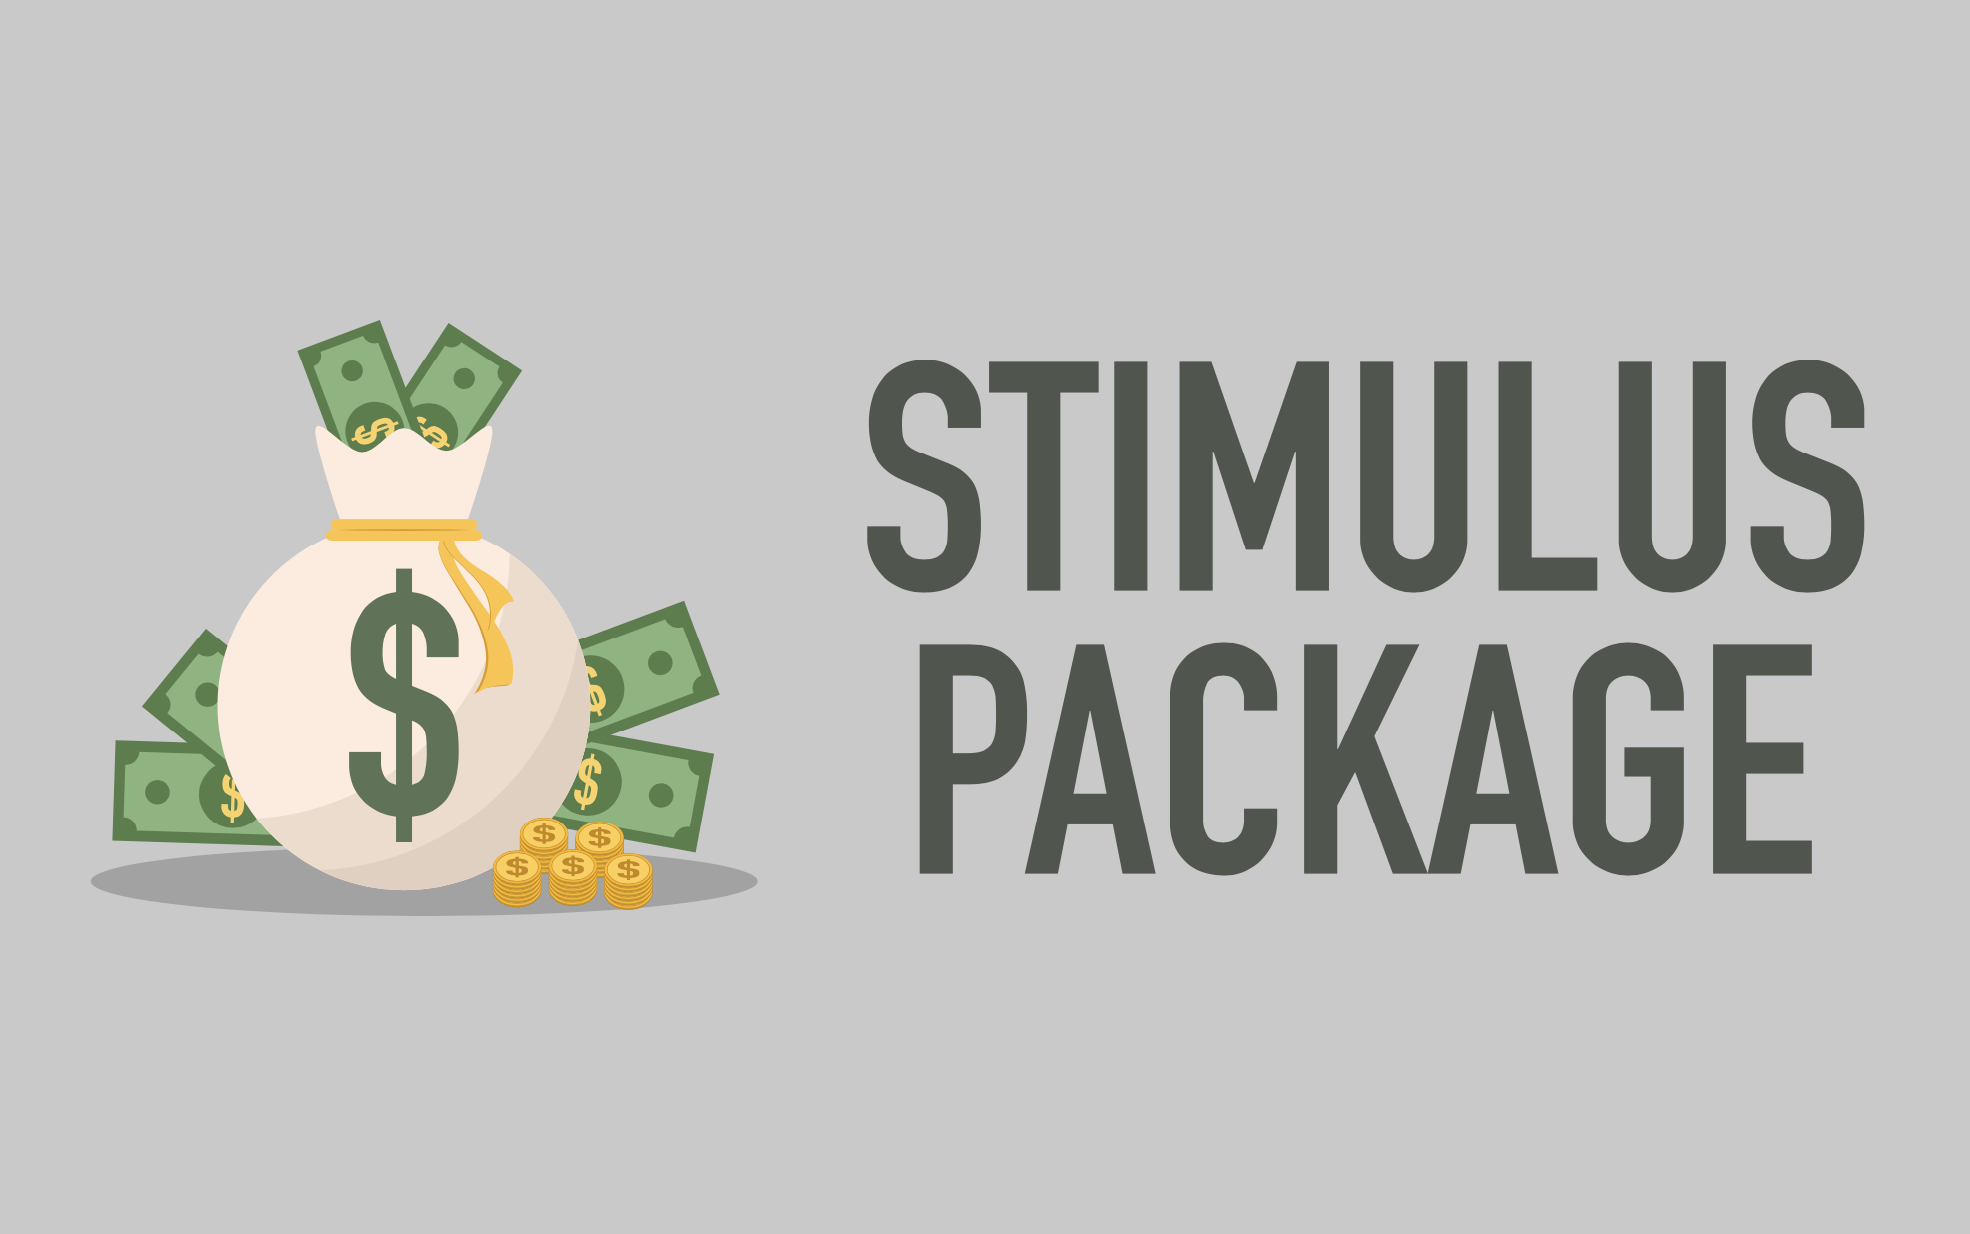 stimulus package illustration